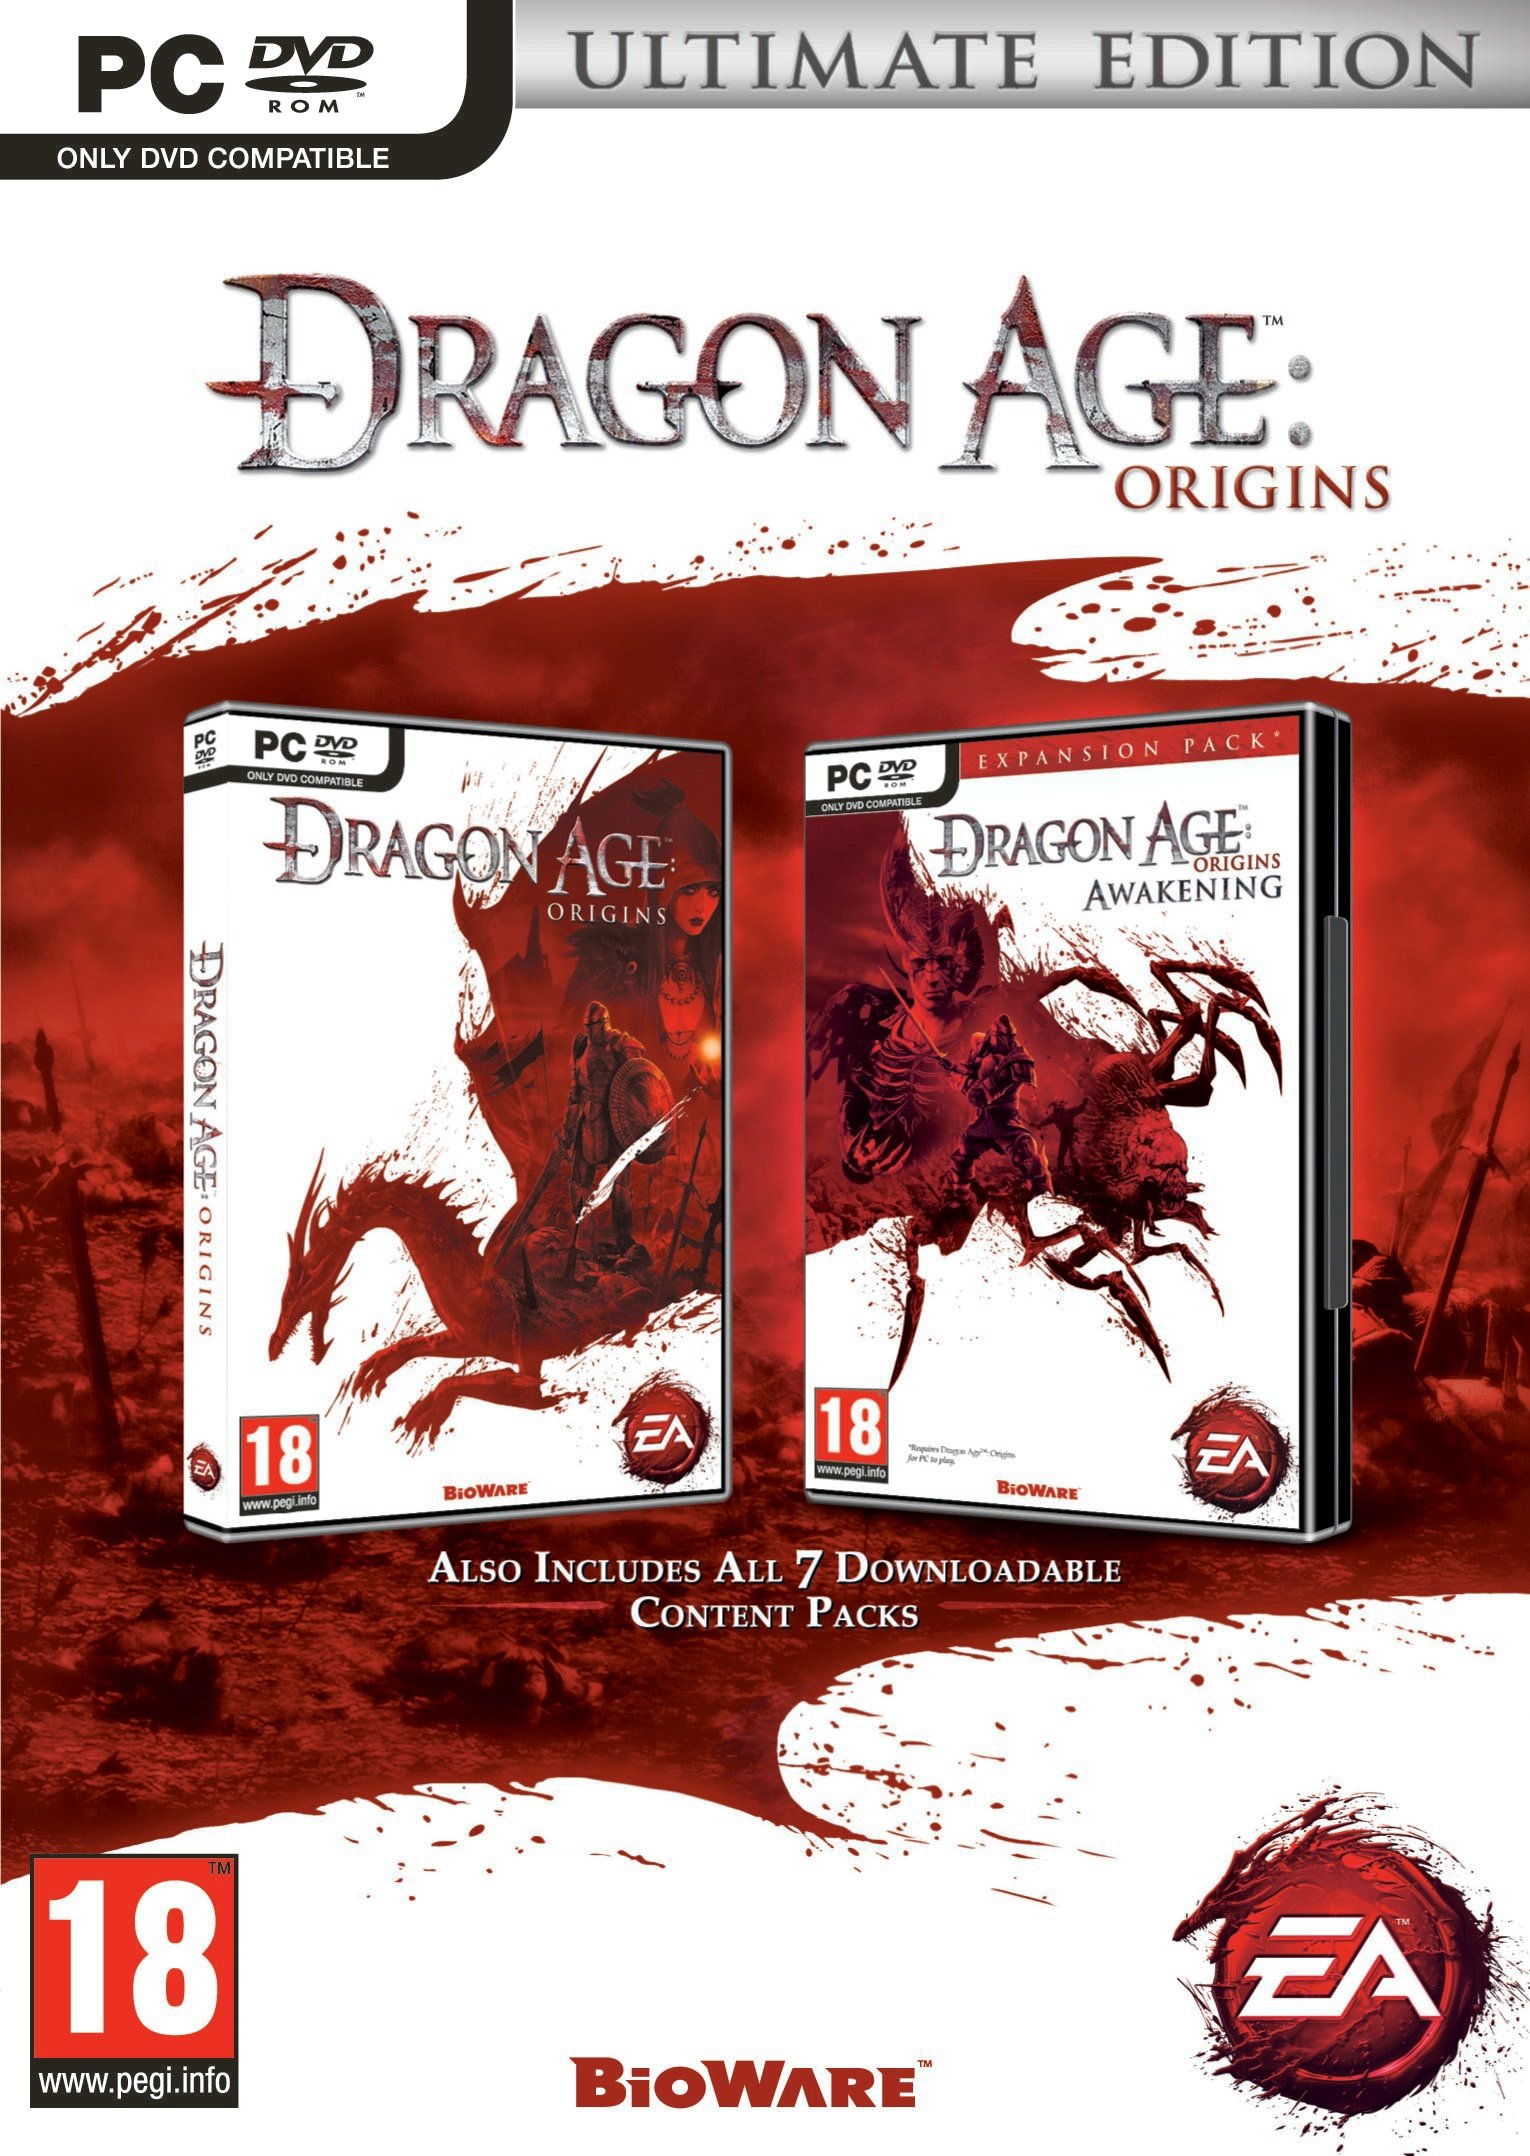 dragon age origins ultimate edition pc free